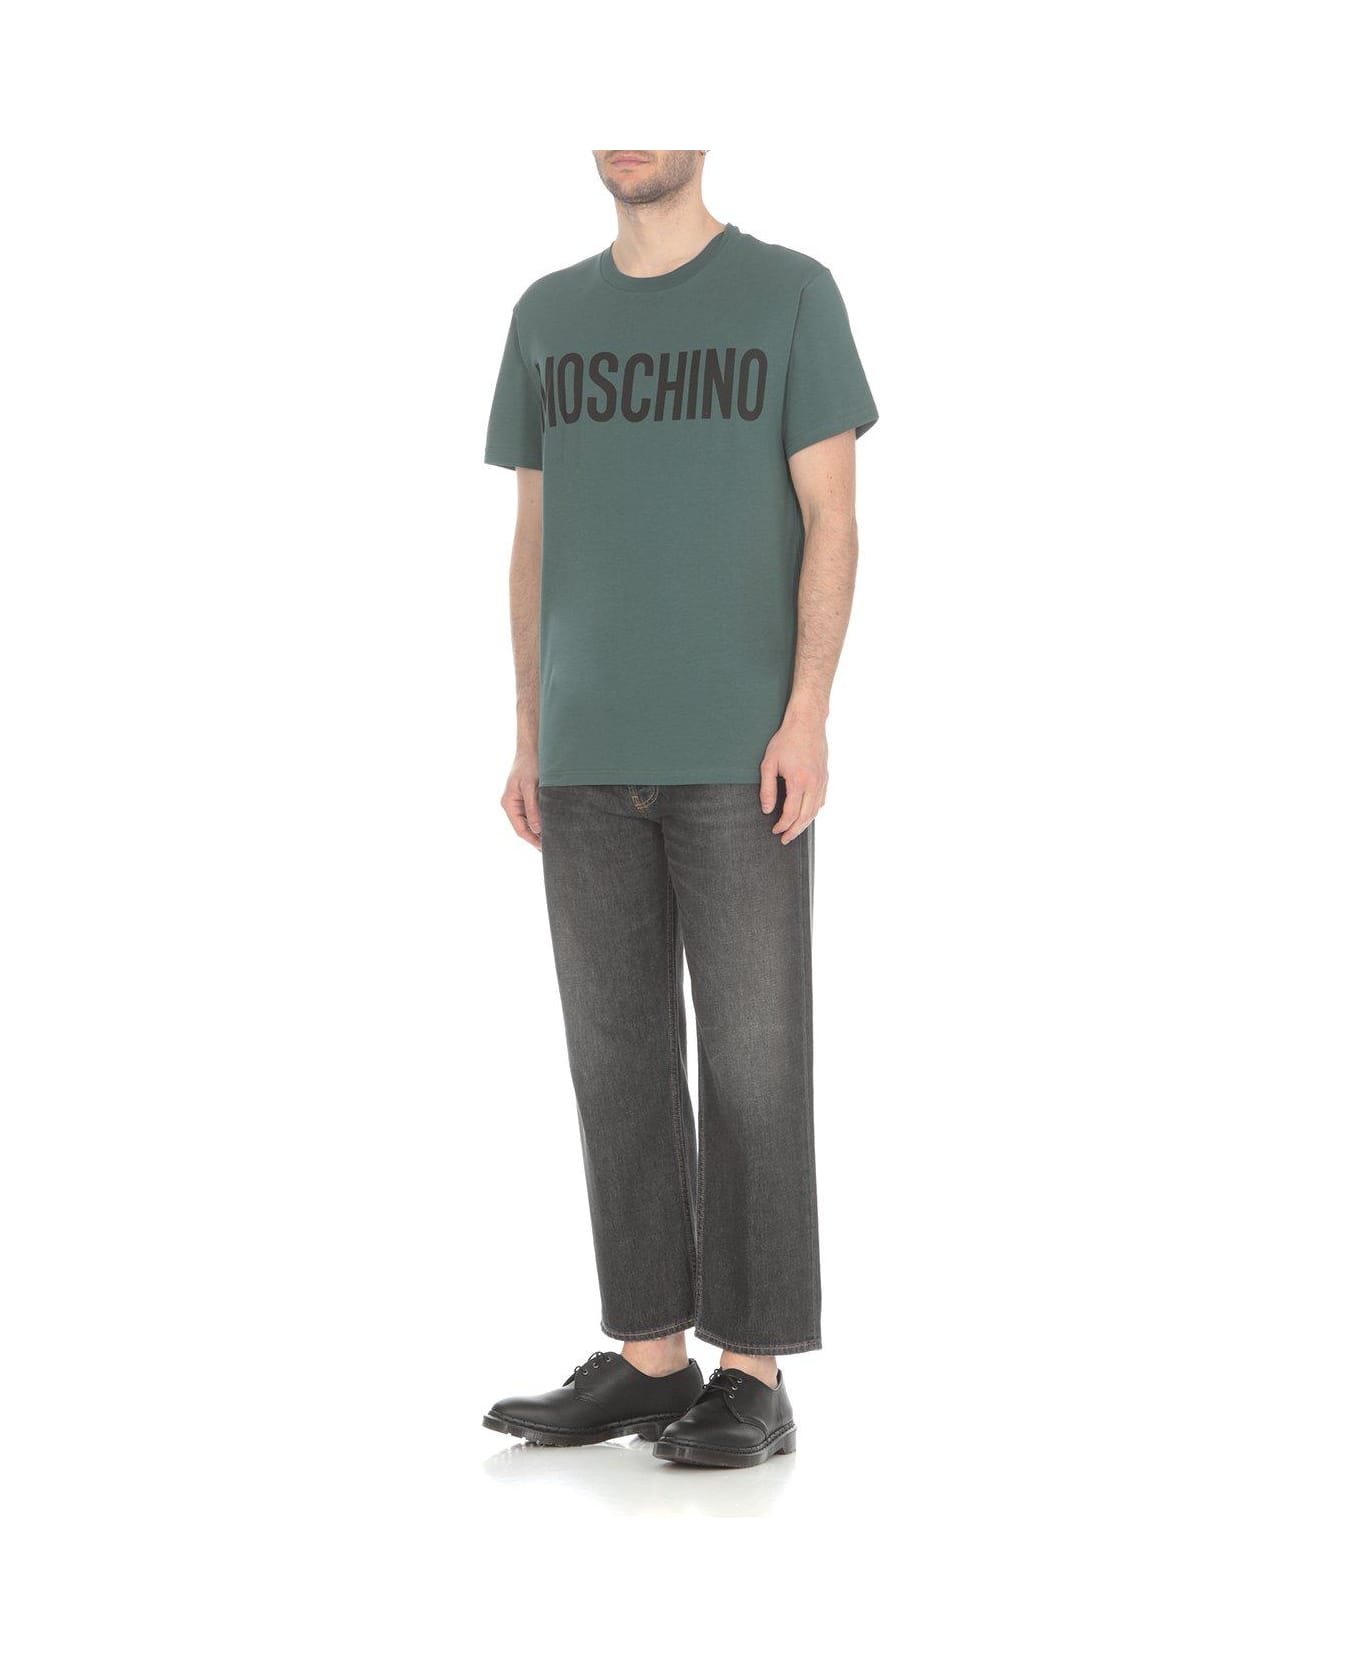 Moschino Logo Printed Crewneck T-shirt - Verde シャツ